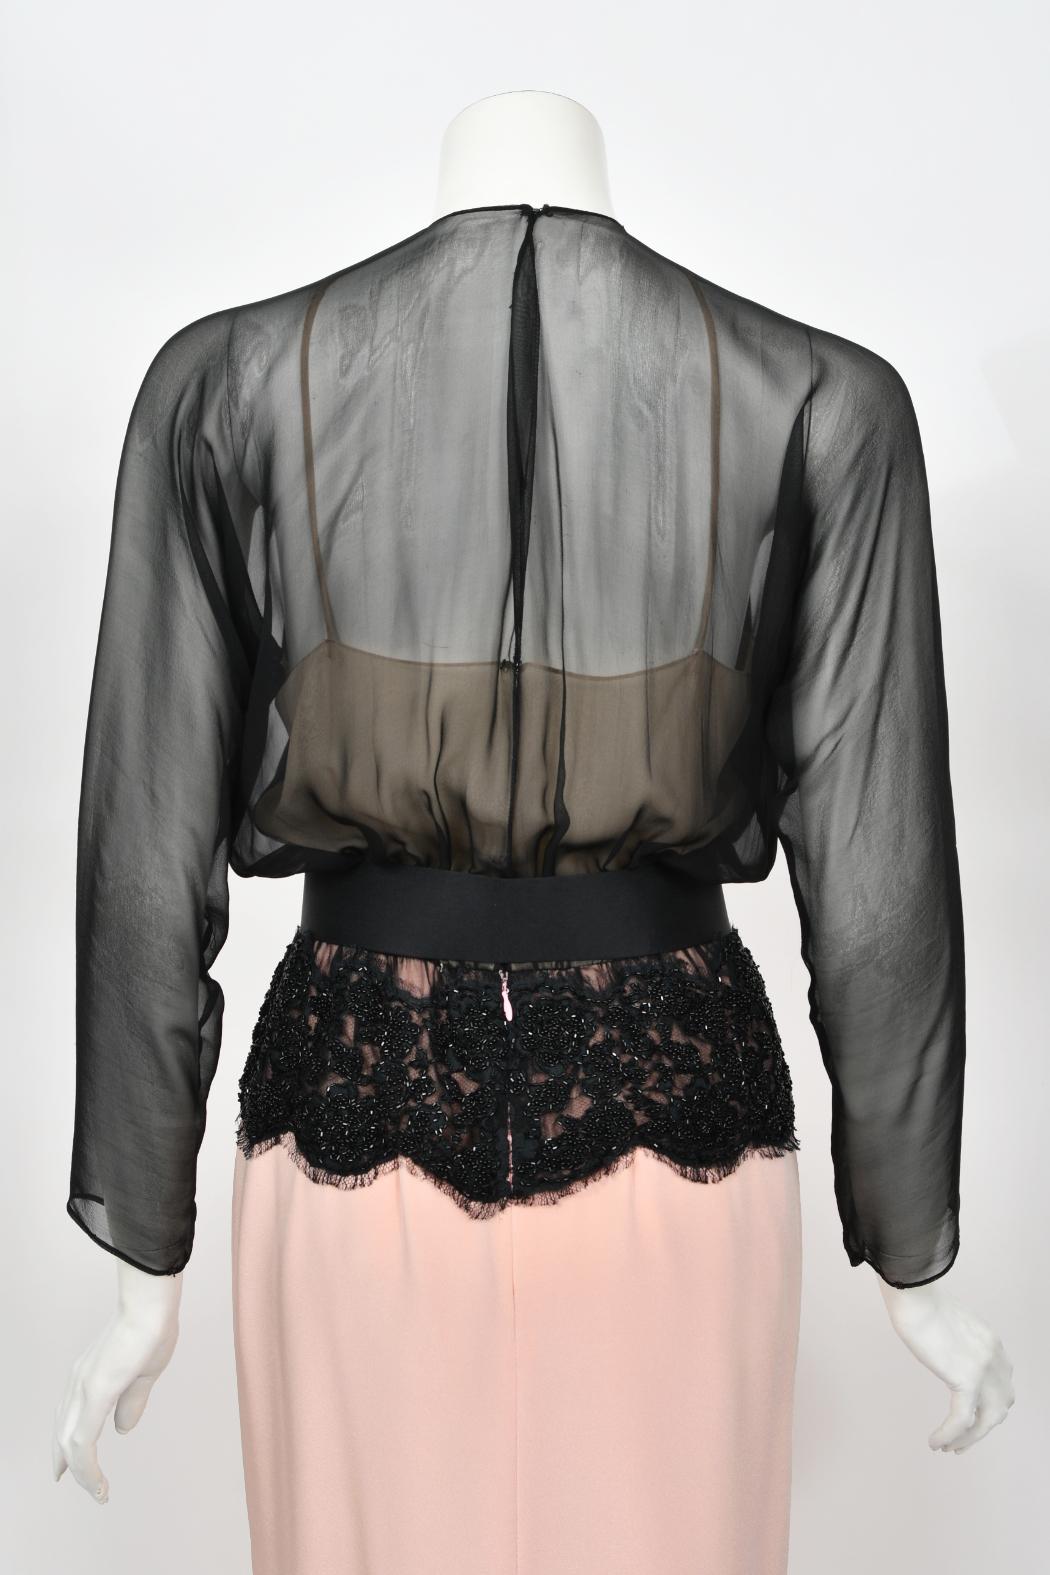 1986 Oscar de la Renta Documented Runway Black Sheer Chiffon & Pink Silk Gown For Sale 8